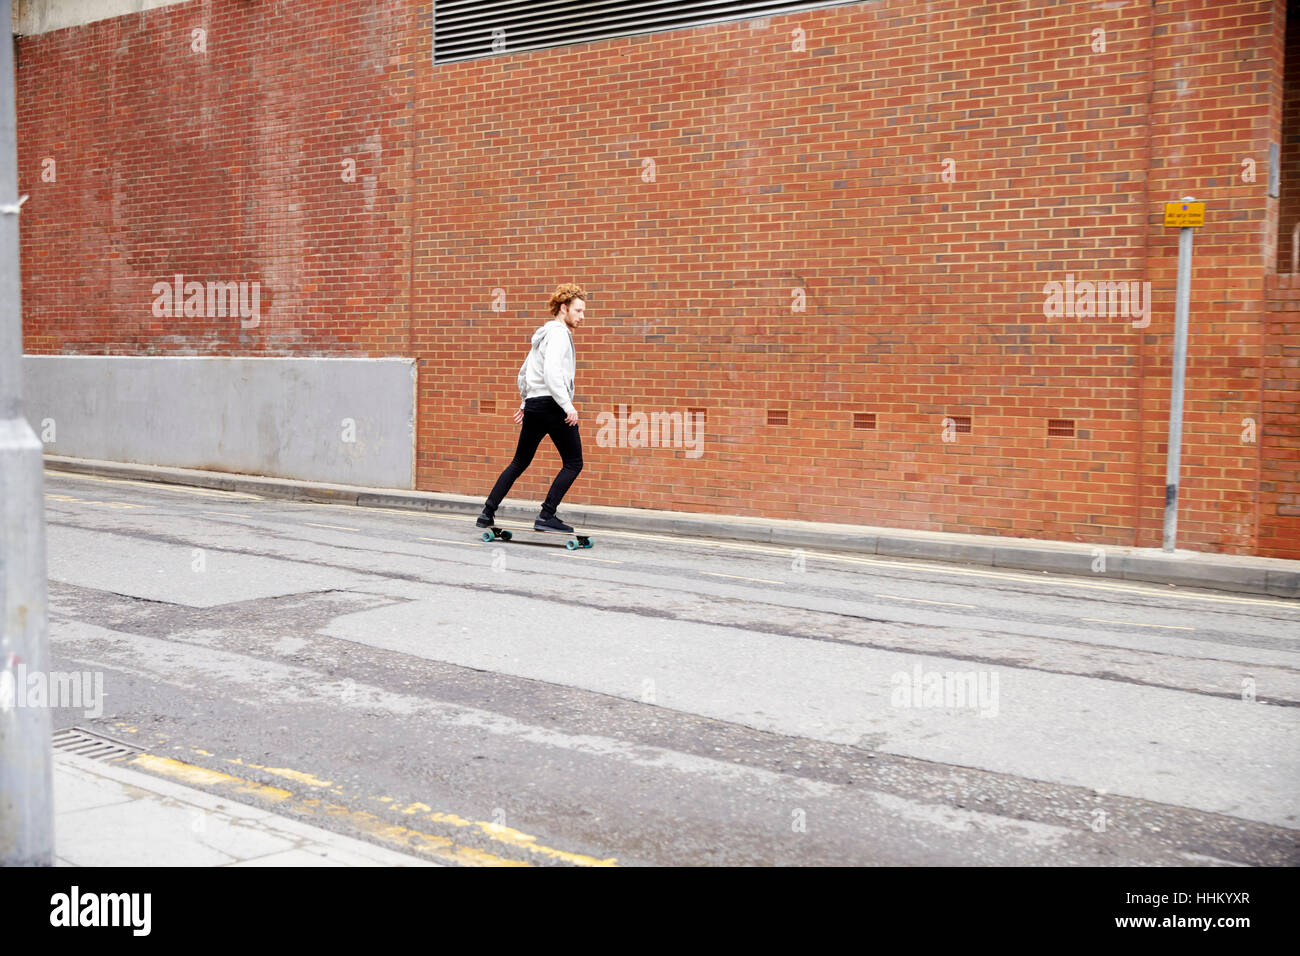 Hombre de pelo rojo skateboarding en una vía urbana, vista lateral Foto de stock